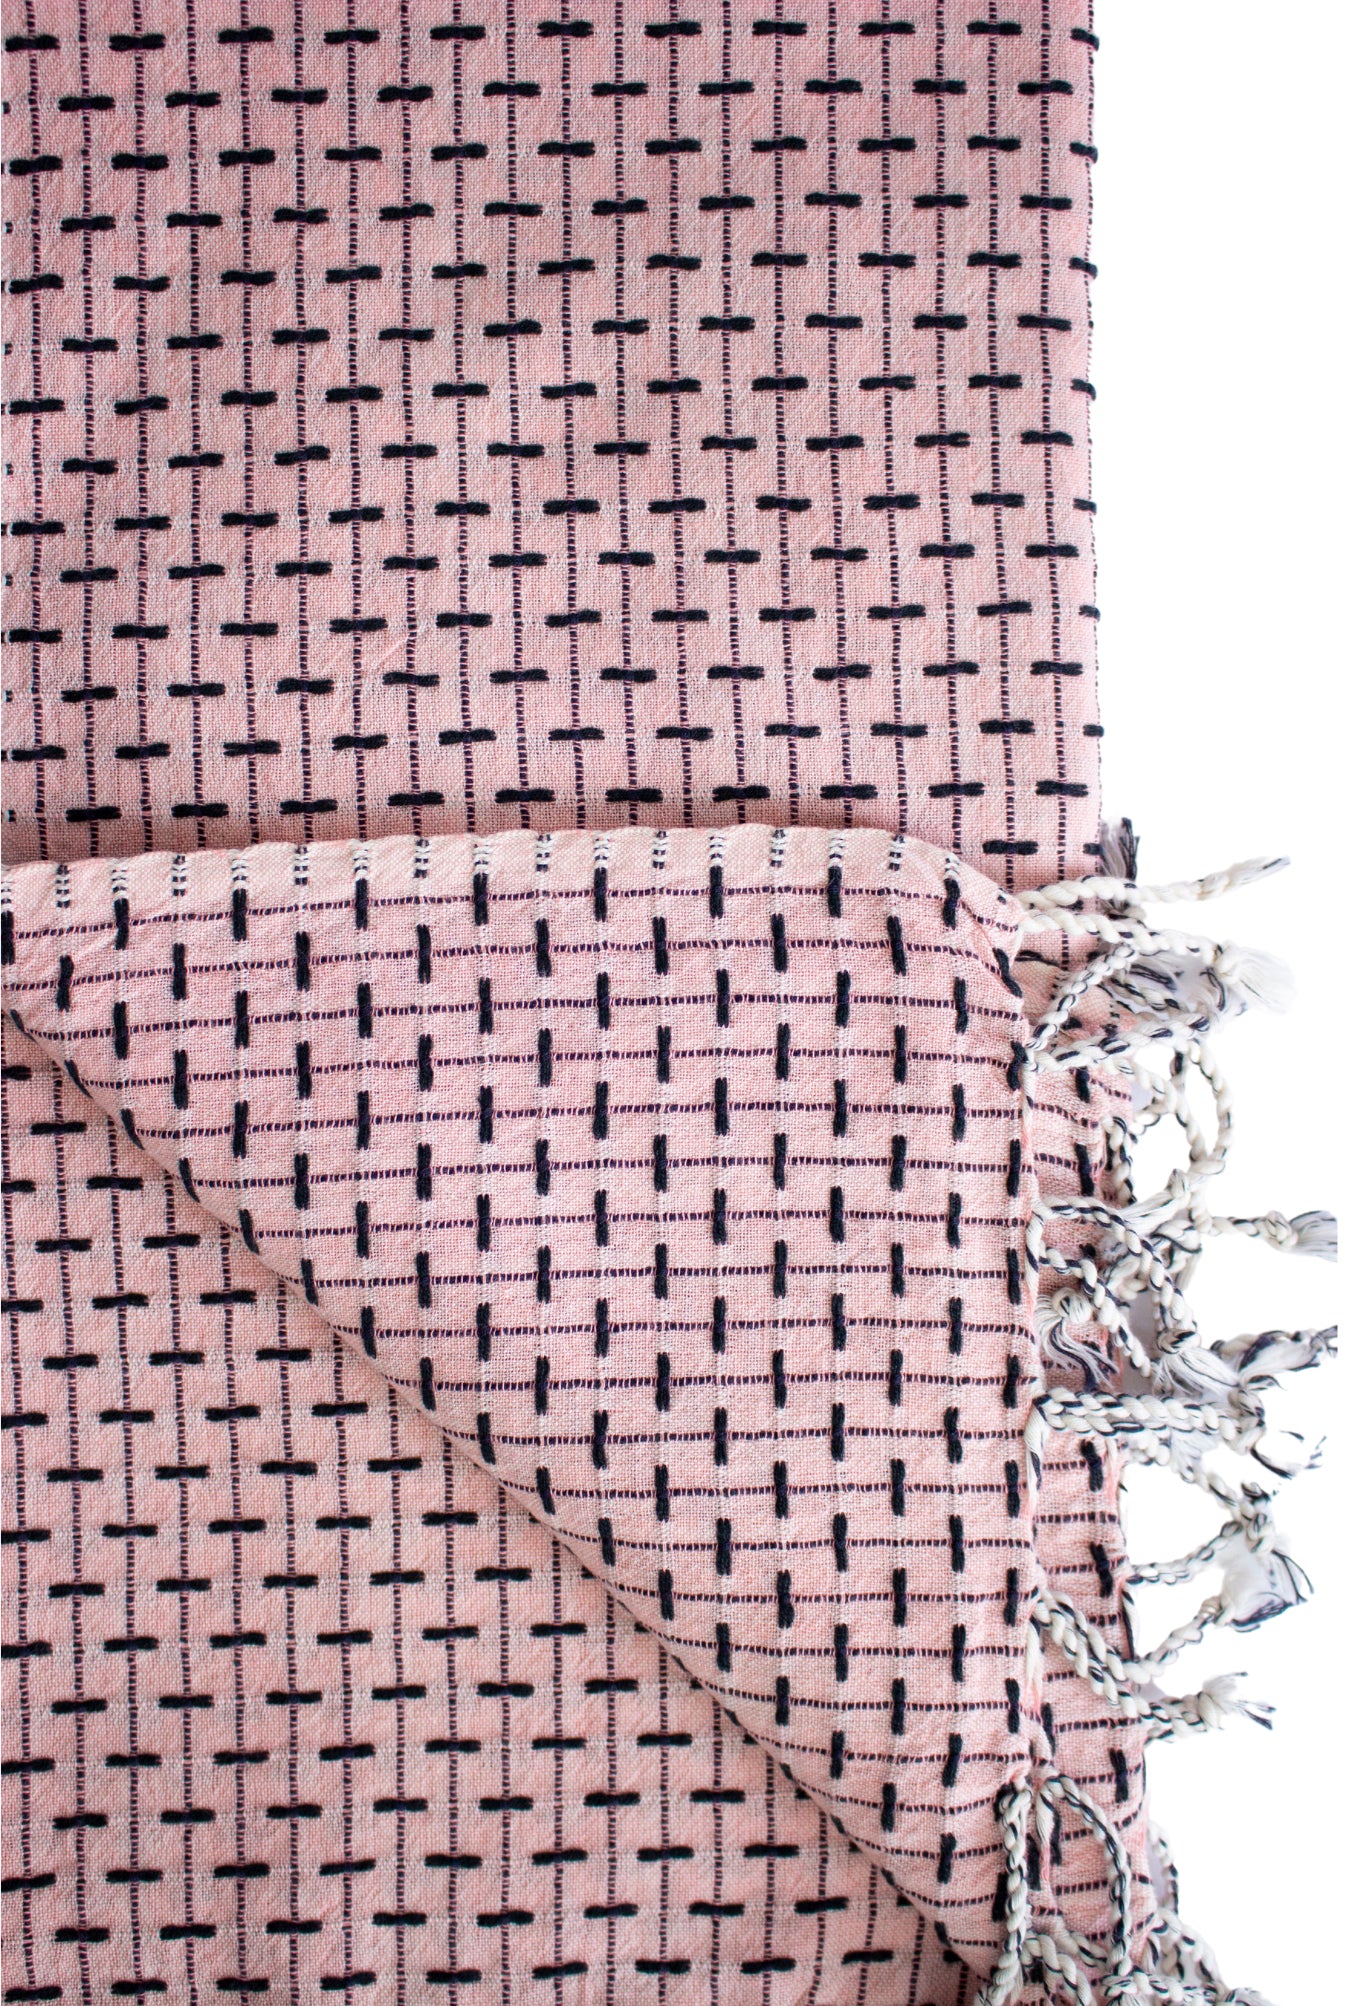 Multipurpose Rain Scarf & Travel Towels Dusty Pink